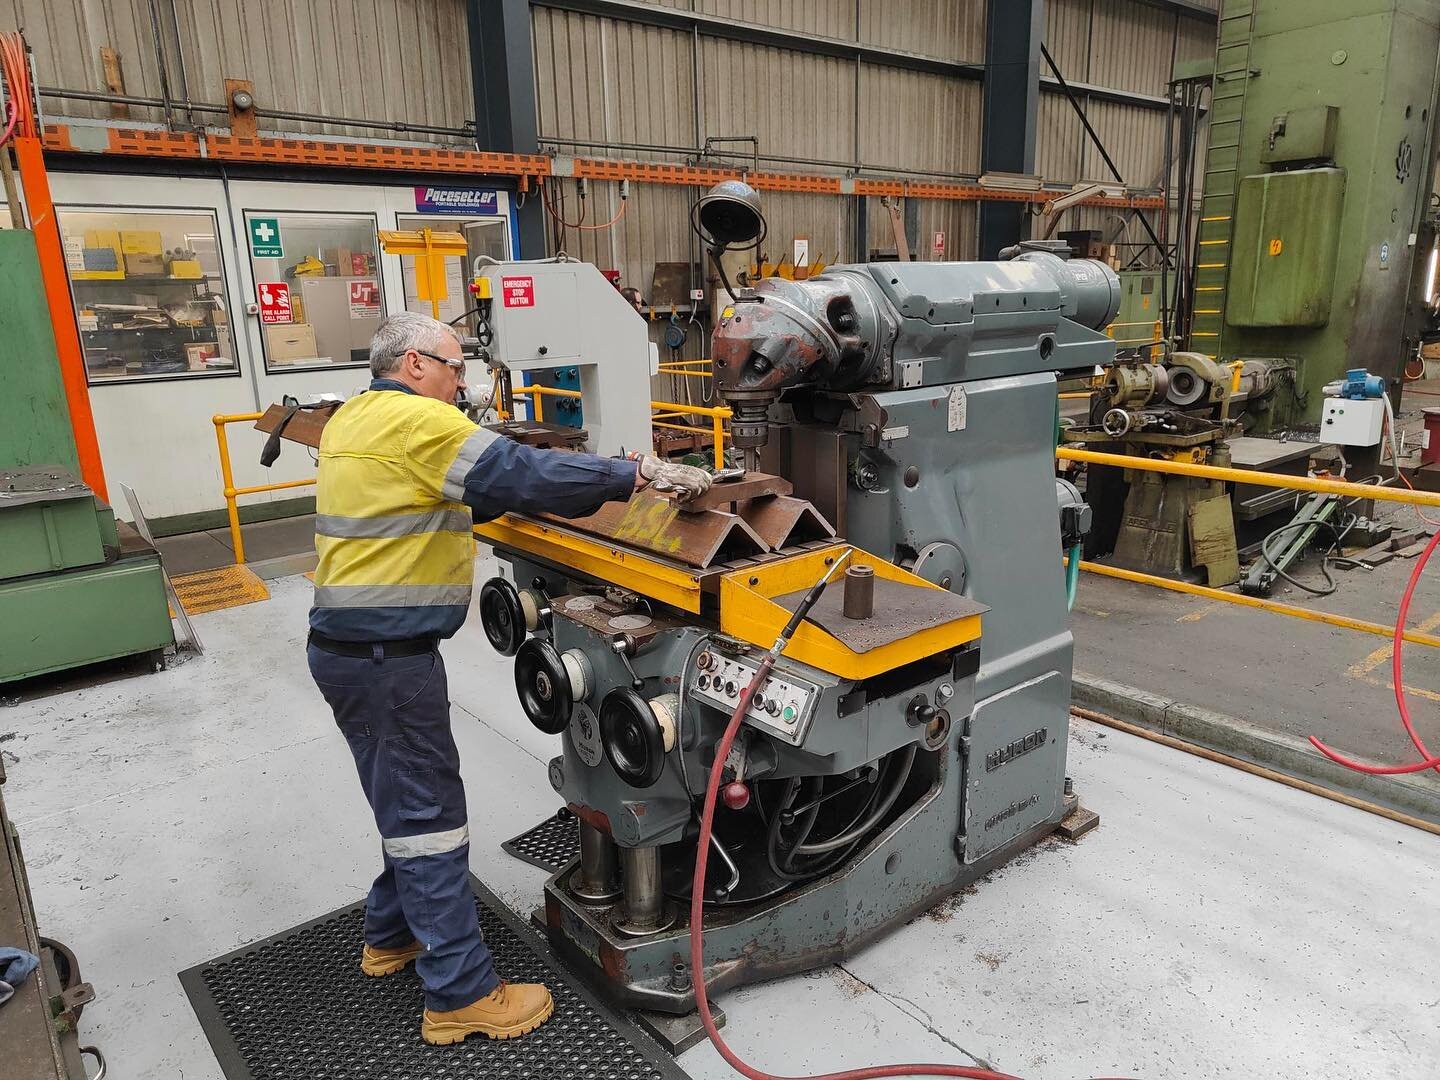 Paul setting up the HURON to take some chunky cuts!

JTE Est 1934.
Australian Engineering at its best. #machineshop 
#engineeringworkshop #melbourne #australia #millingmachine #lathe #cnc #cncmachining #welding #machinerestoration #submergedarcweldin